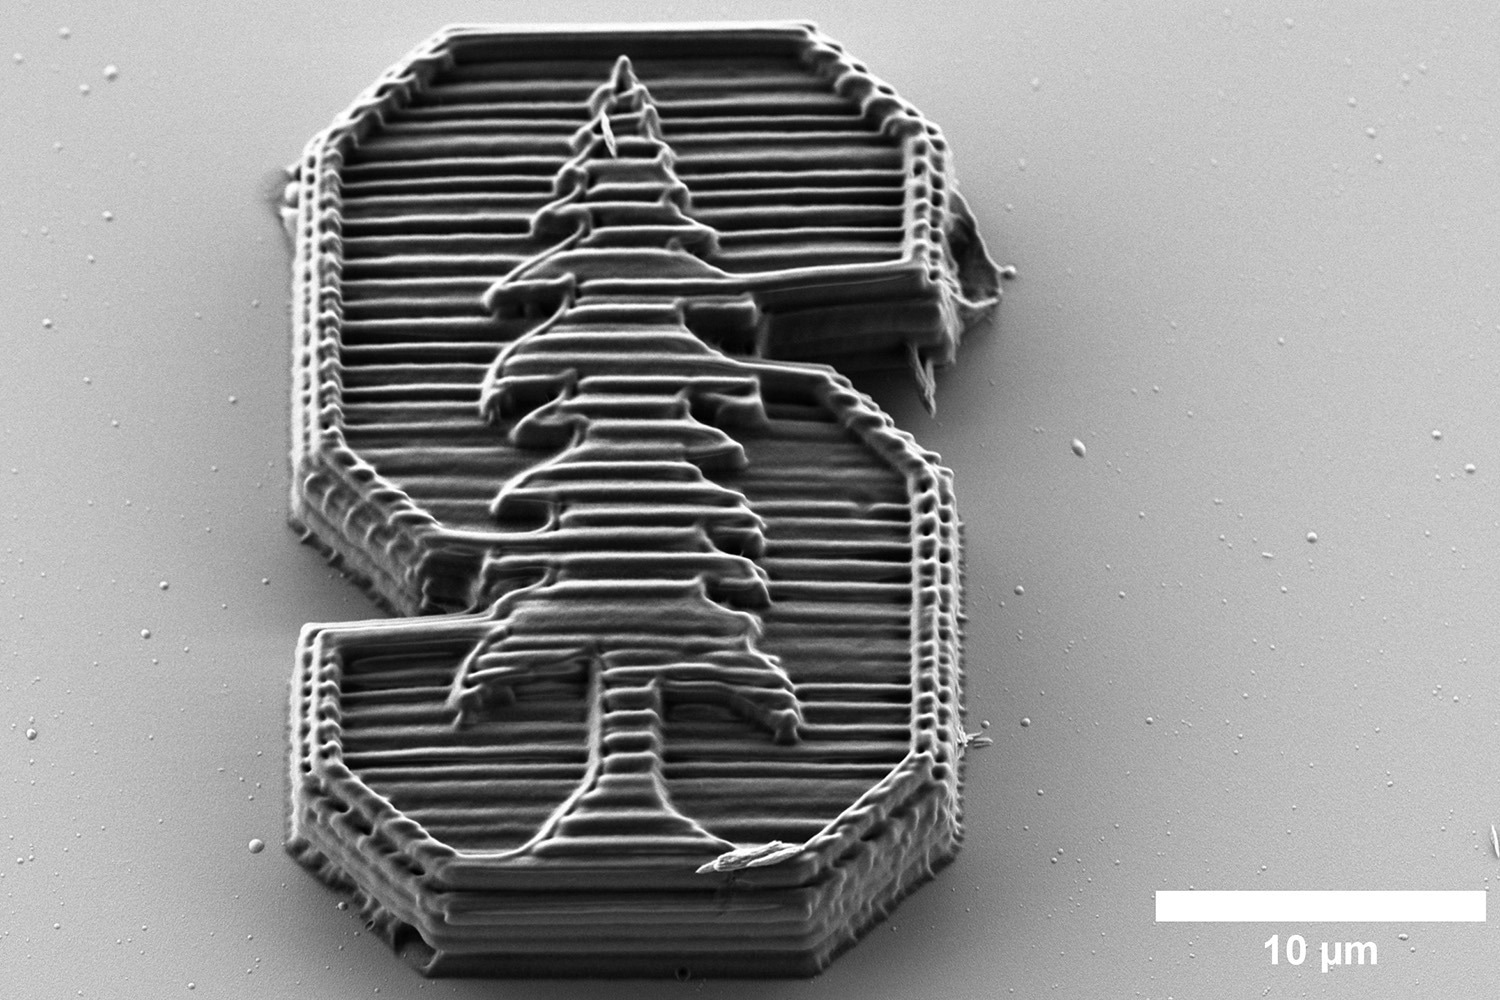 Tiny but strong Stanford logo made using nanoscale 3D printing. (Image credit: John Kulikowski)